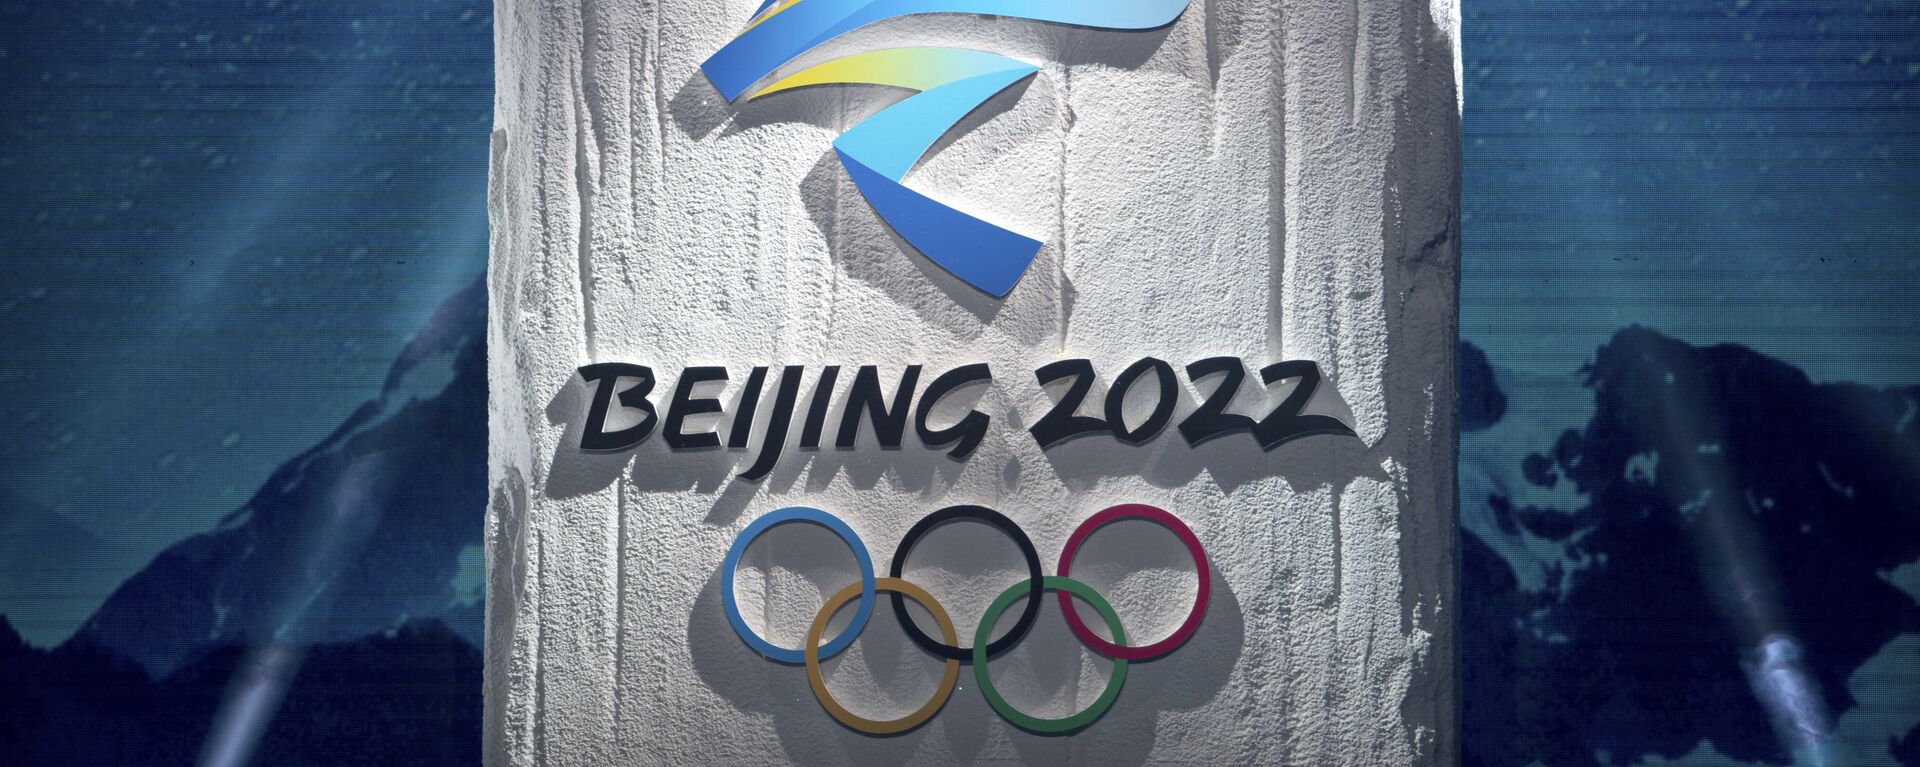 Logo de JJOO 2022 en Pekín - Sputnik Mundo, 1920, 04.02.2021